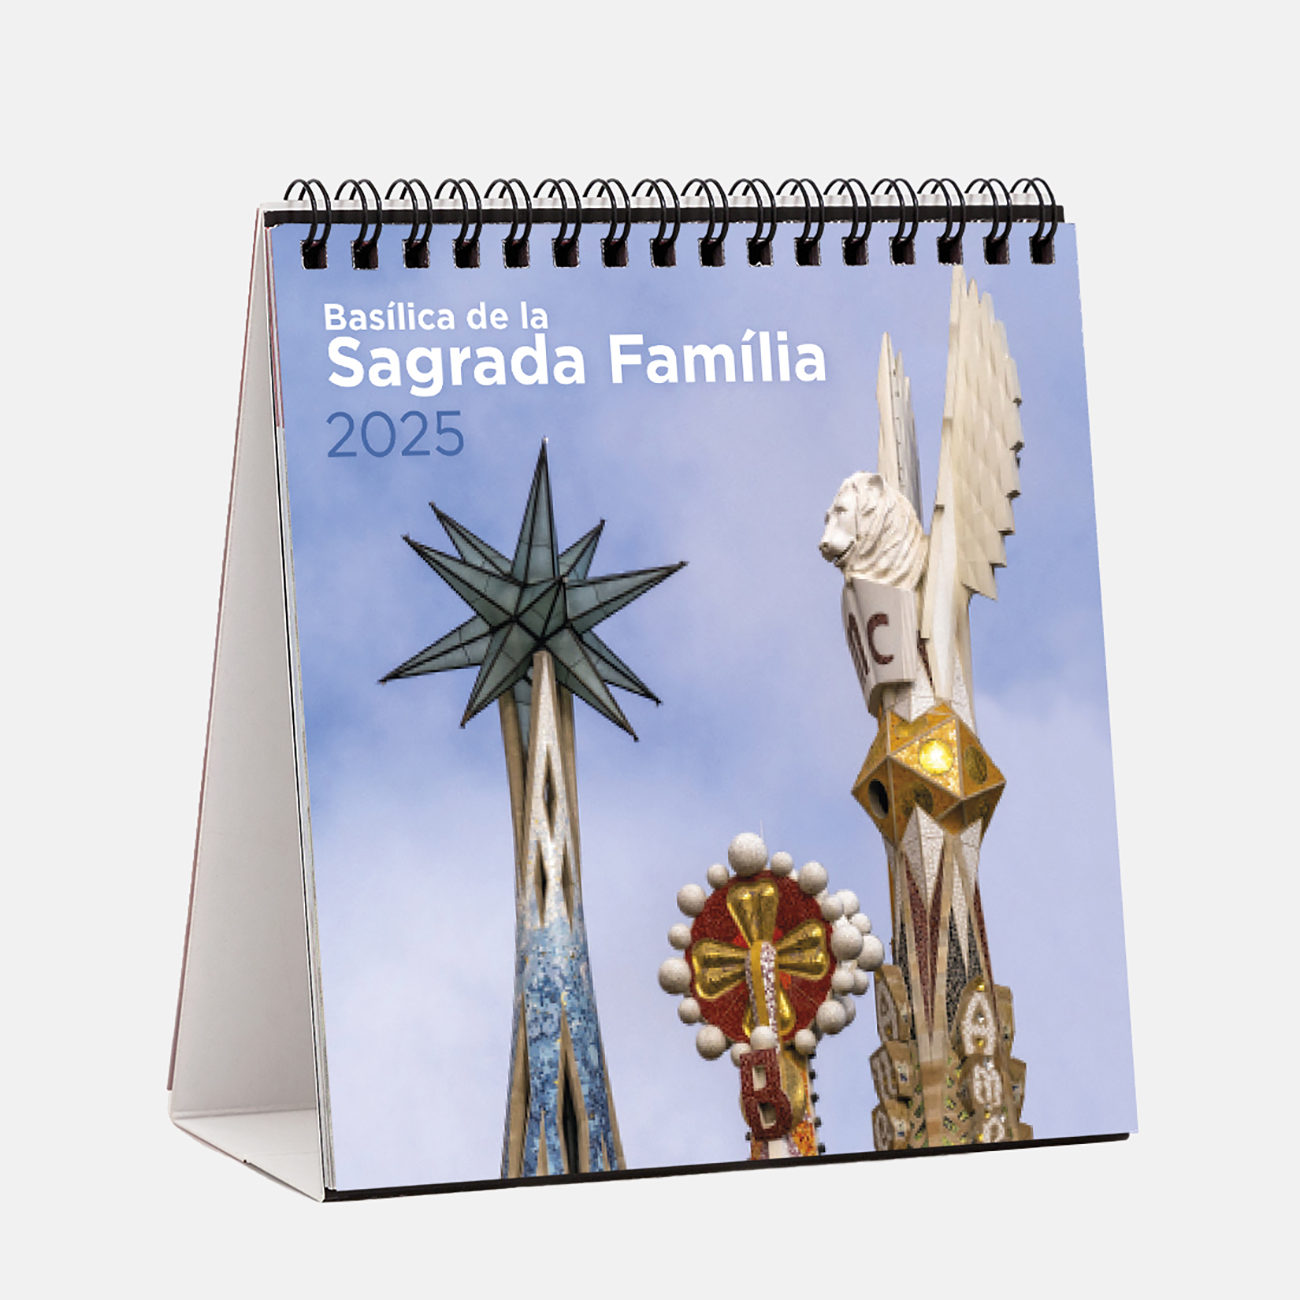 Calendrier 2025 Basílica de la Sagrada Família s25sf calendario sobremesa 2025 sagrada familia